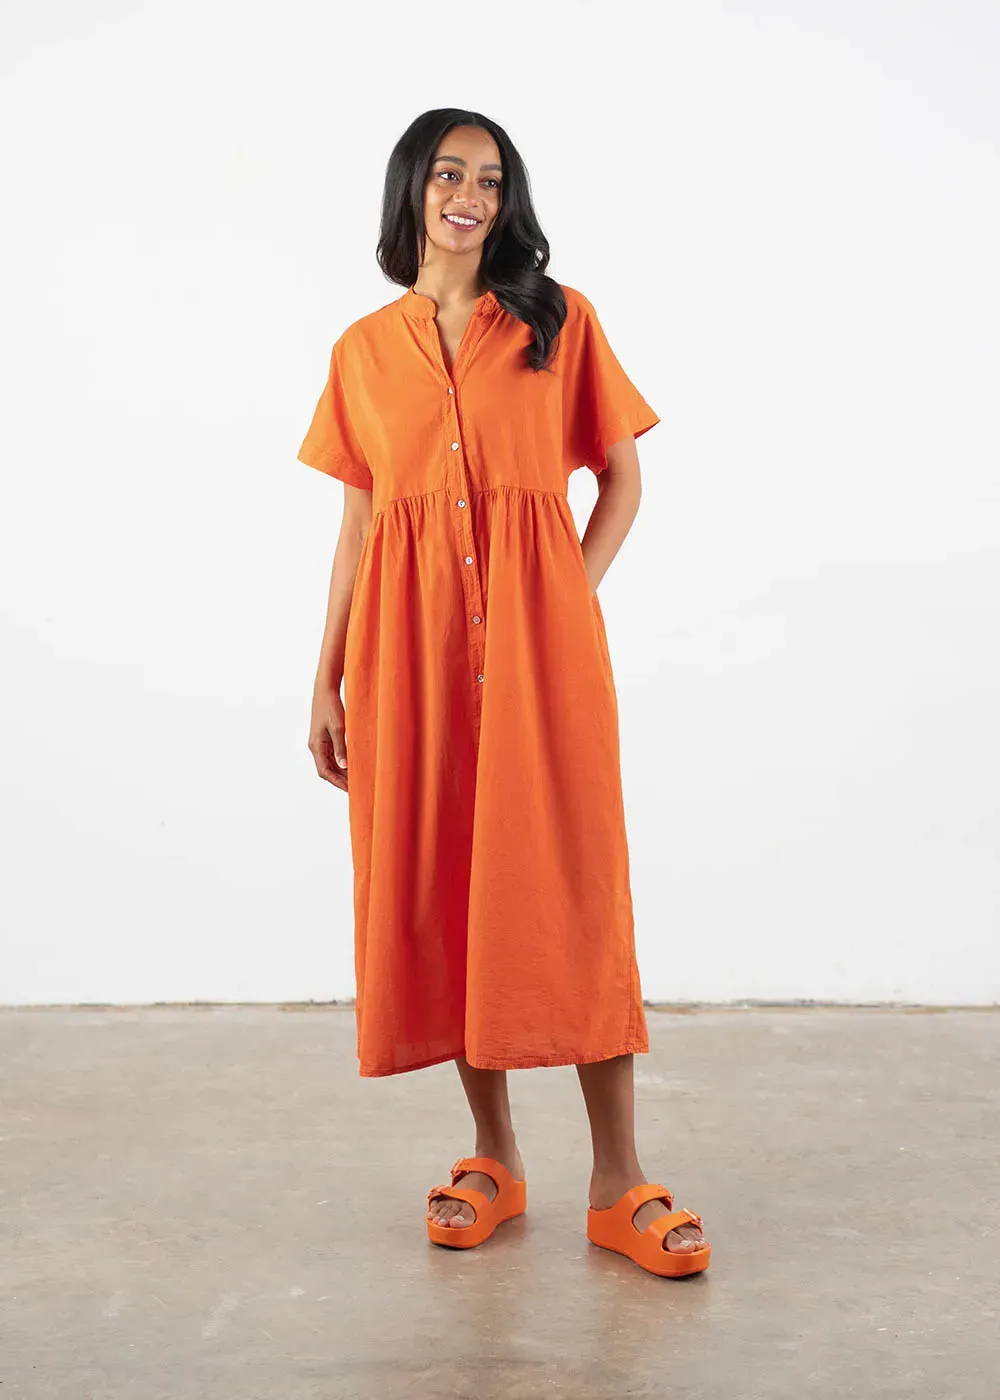 A model wearing a loose, oversized midi dress in a vibrant tangerine orange